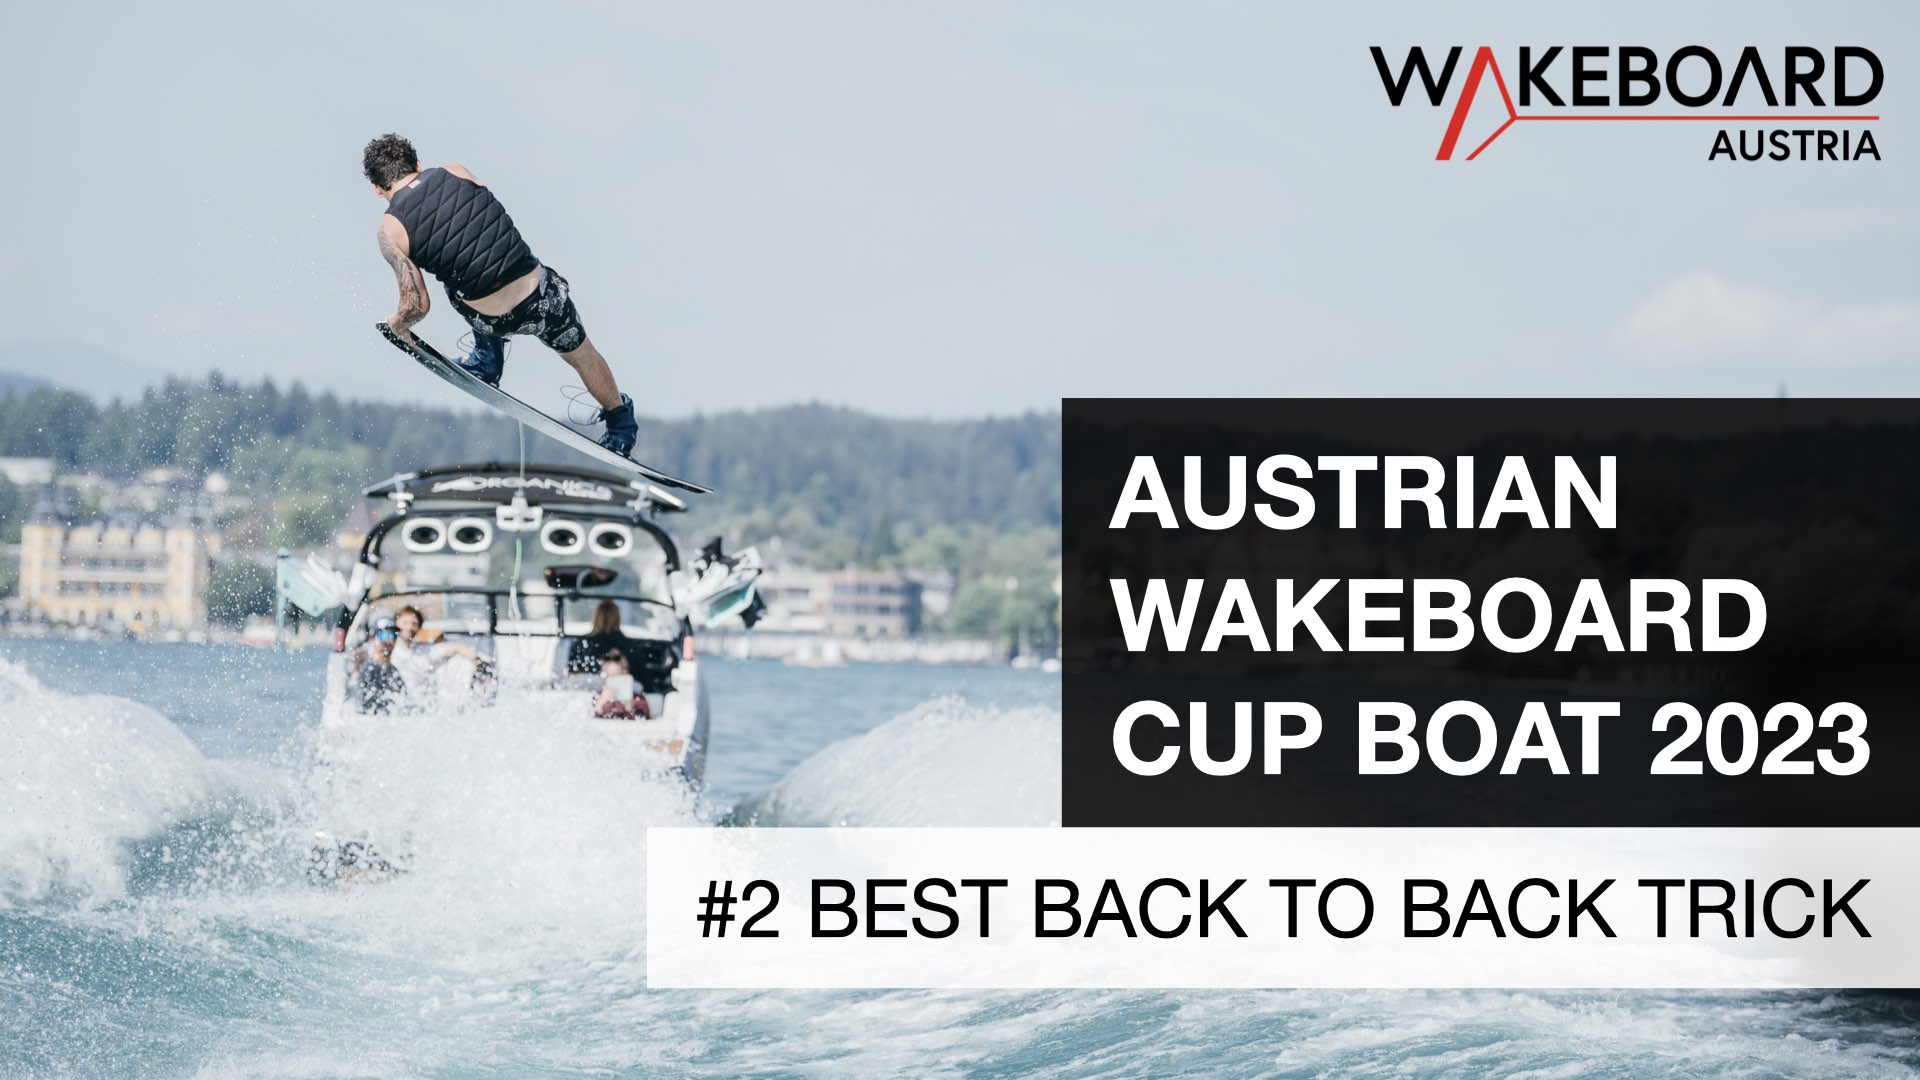 Wakeboard Boat Tour Austria 2023: #2 Best Back to Back Tricks